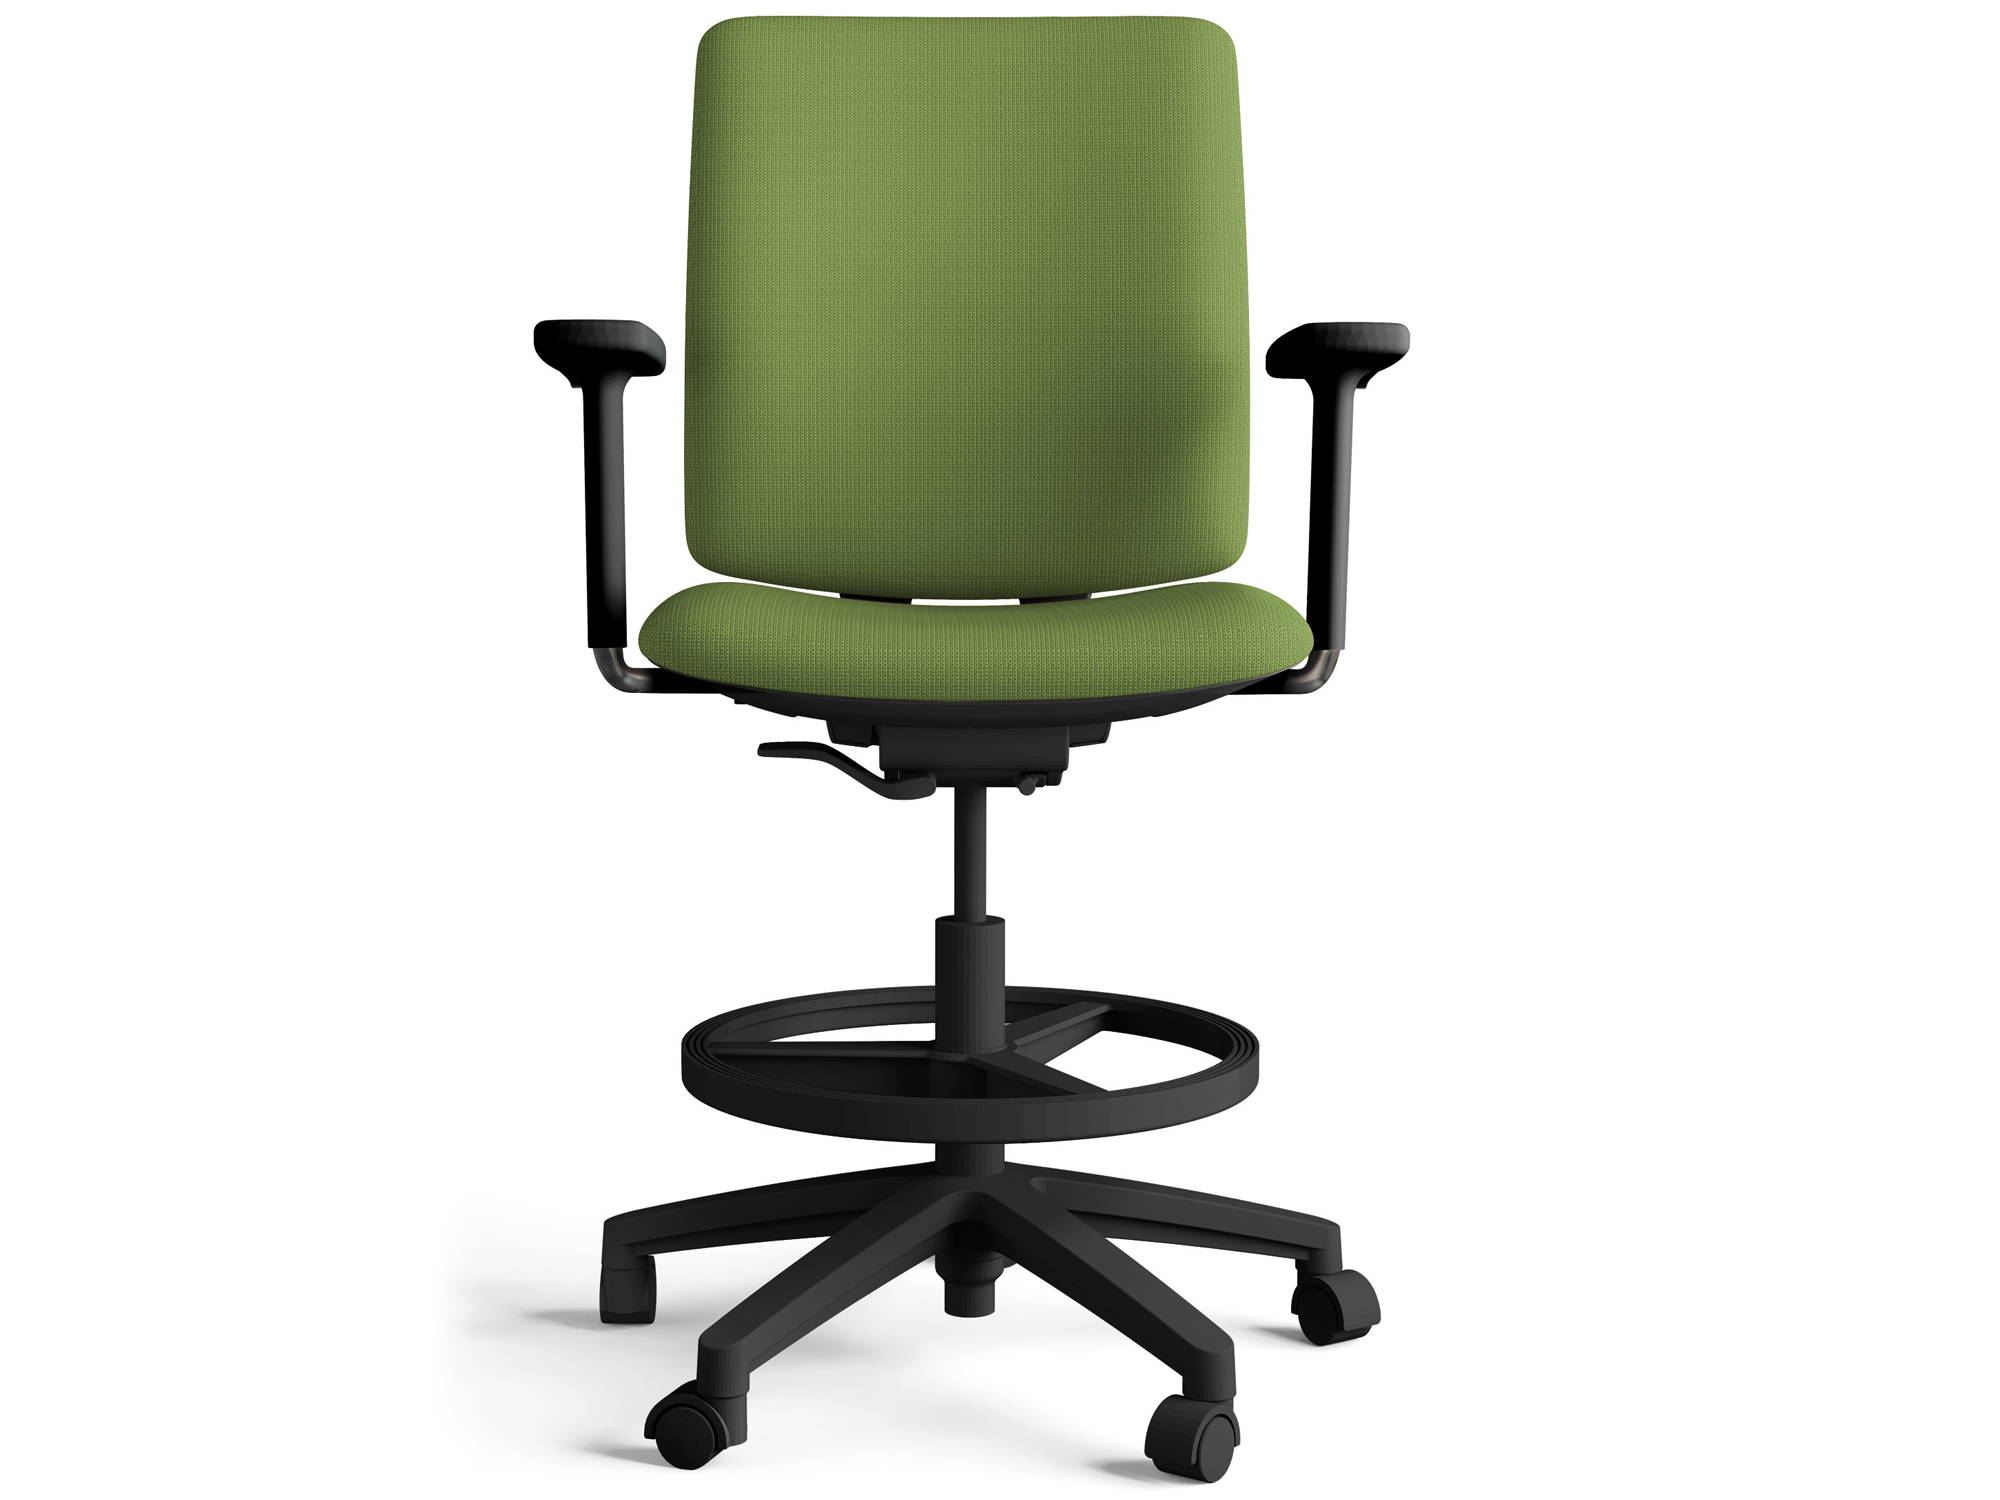 Chair-design-24.jpg